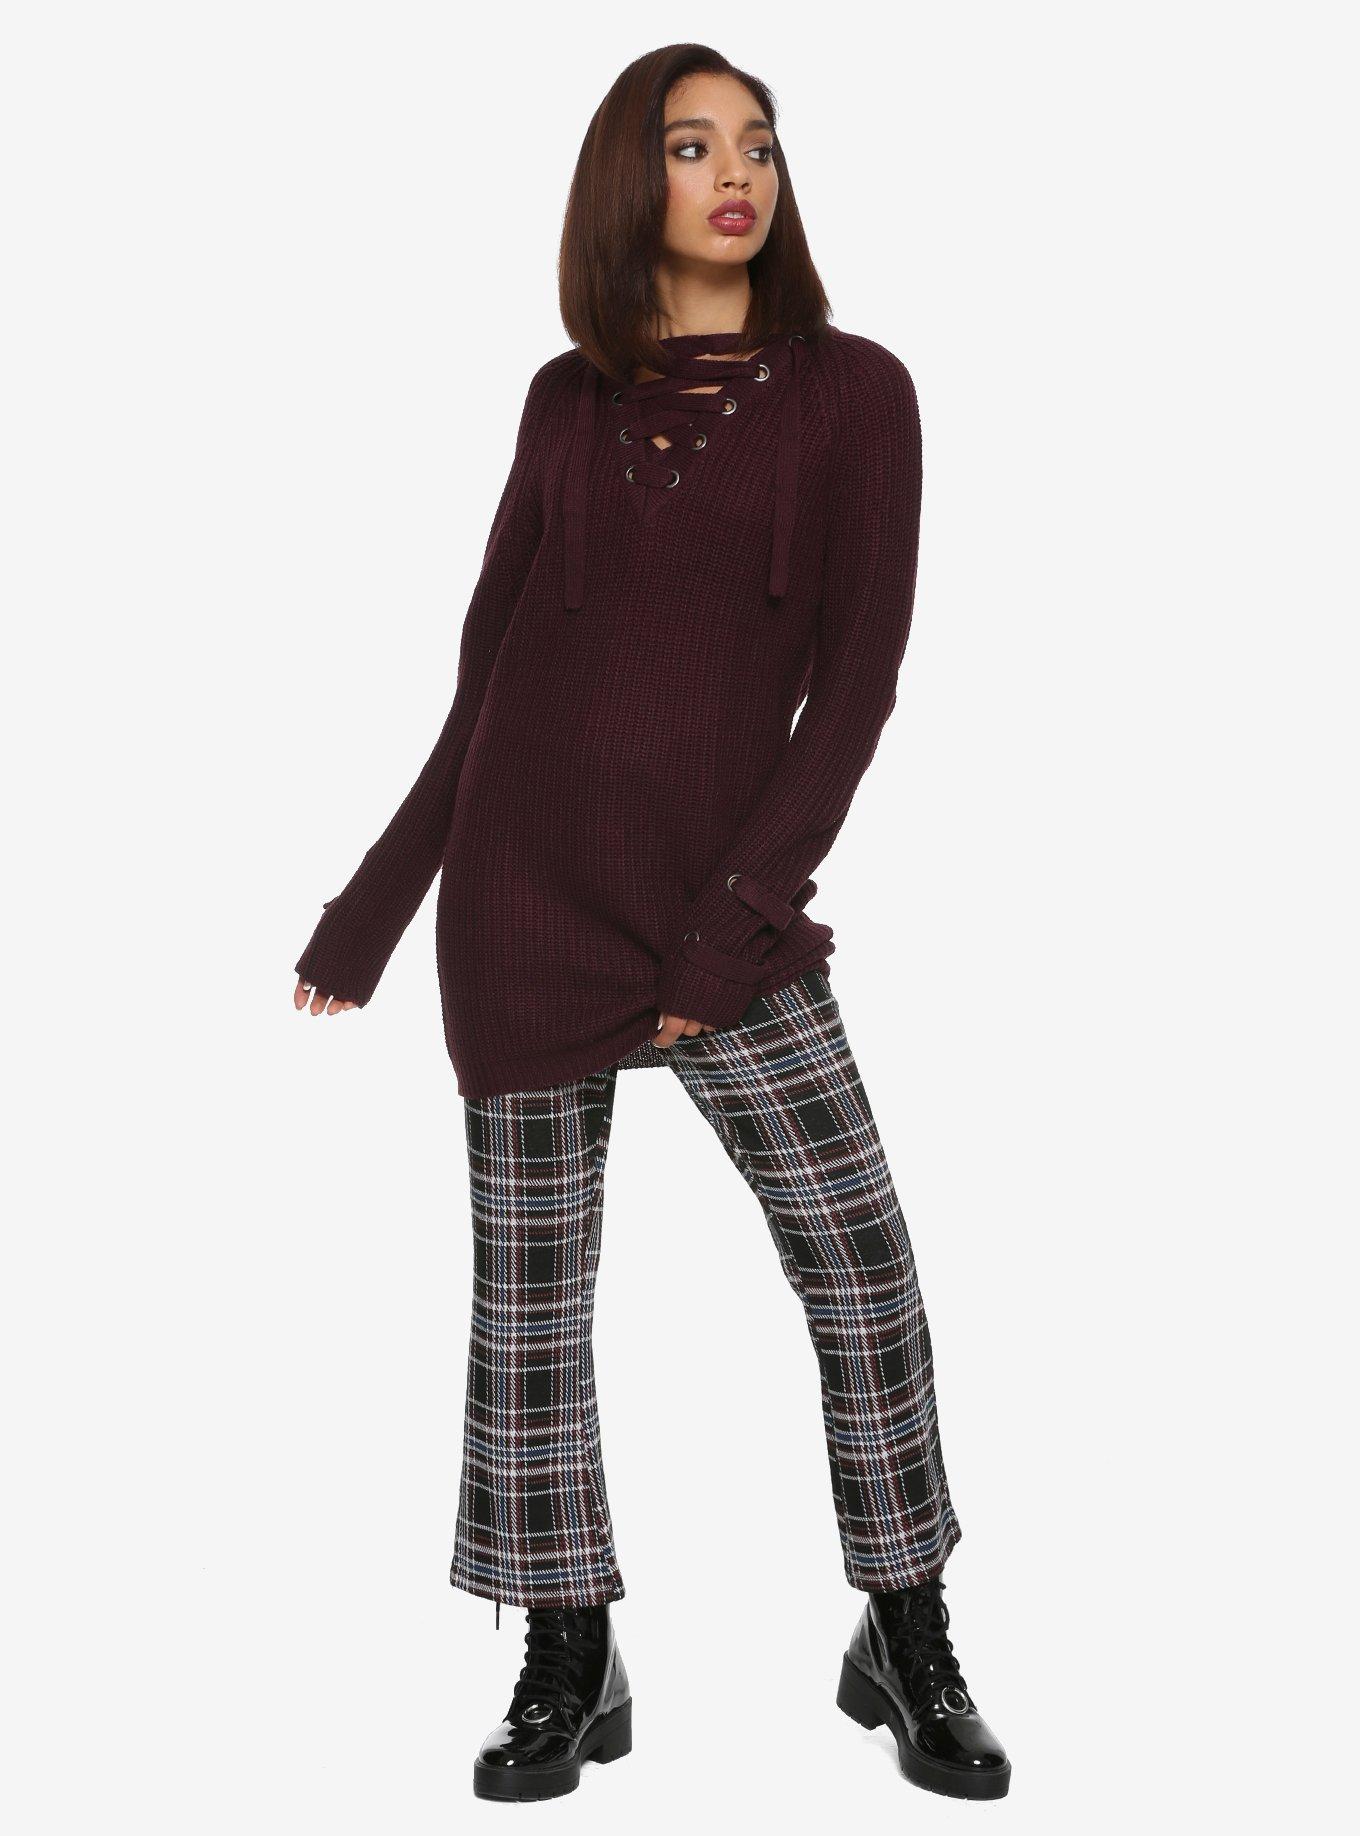 Plum Lace-Up Heavy Knit Girls Tunic Sweater, , alternate